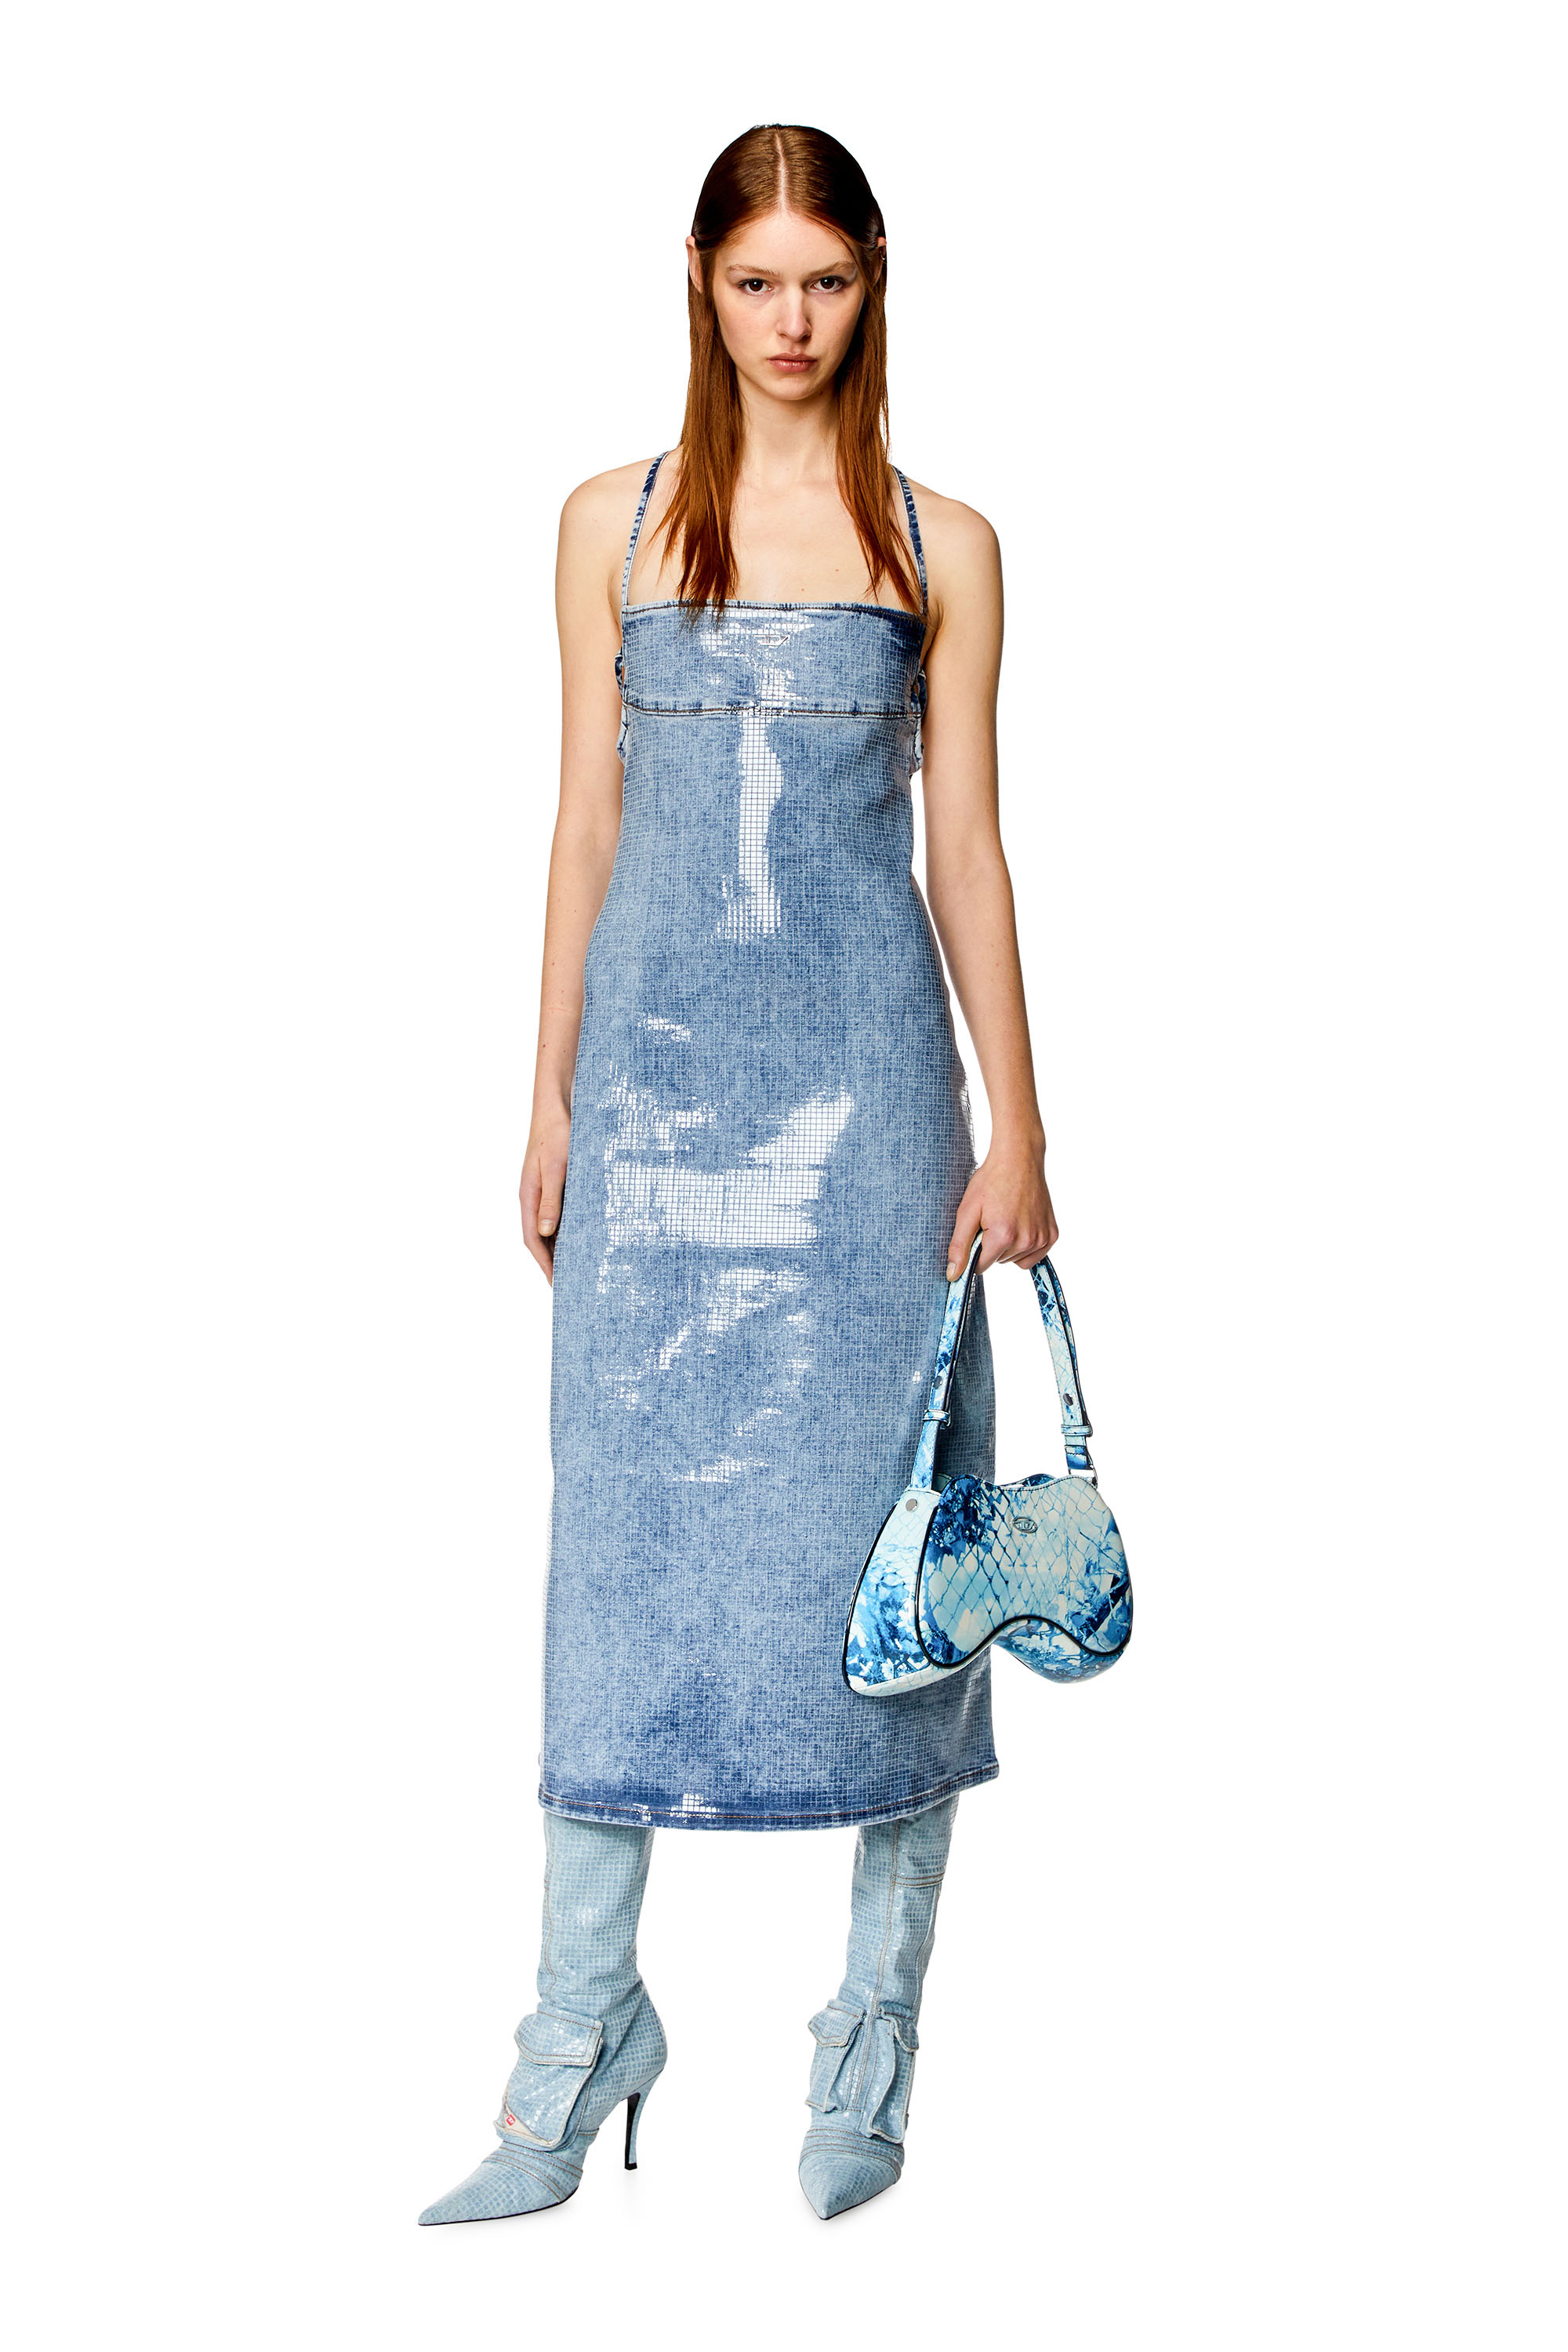 Diesel - DE-HELD-S, Woman Strappy midi dress in sequin denim in Blue - Image 1